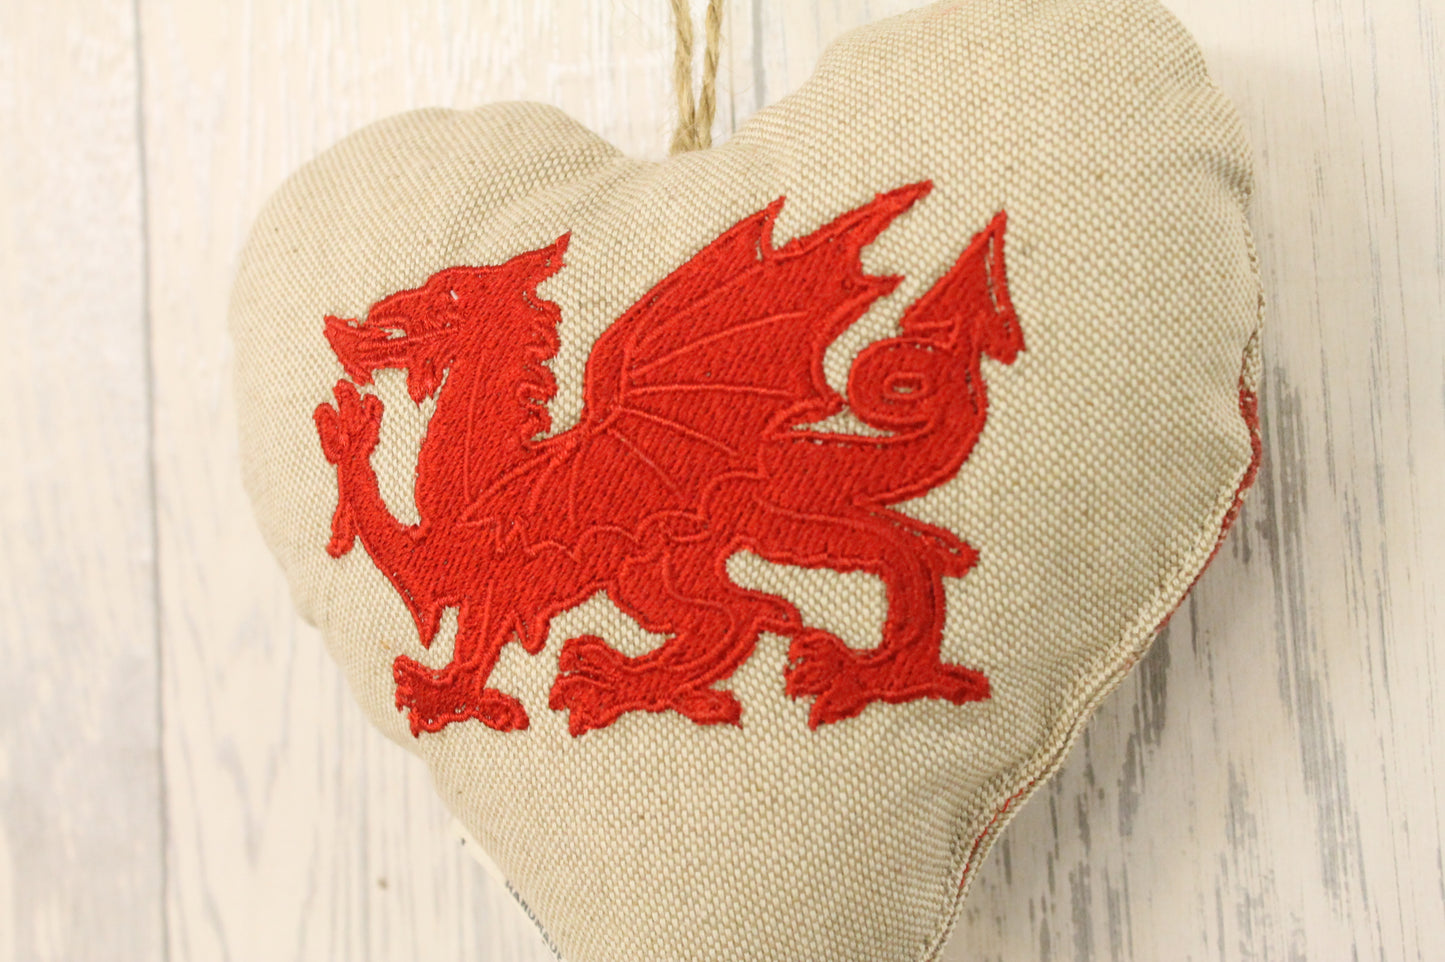 Welsh Dragon Hanging Heart Decoration - Lizzie Dixon Designs